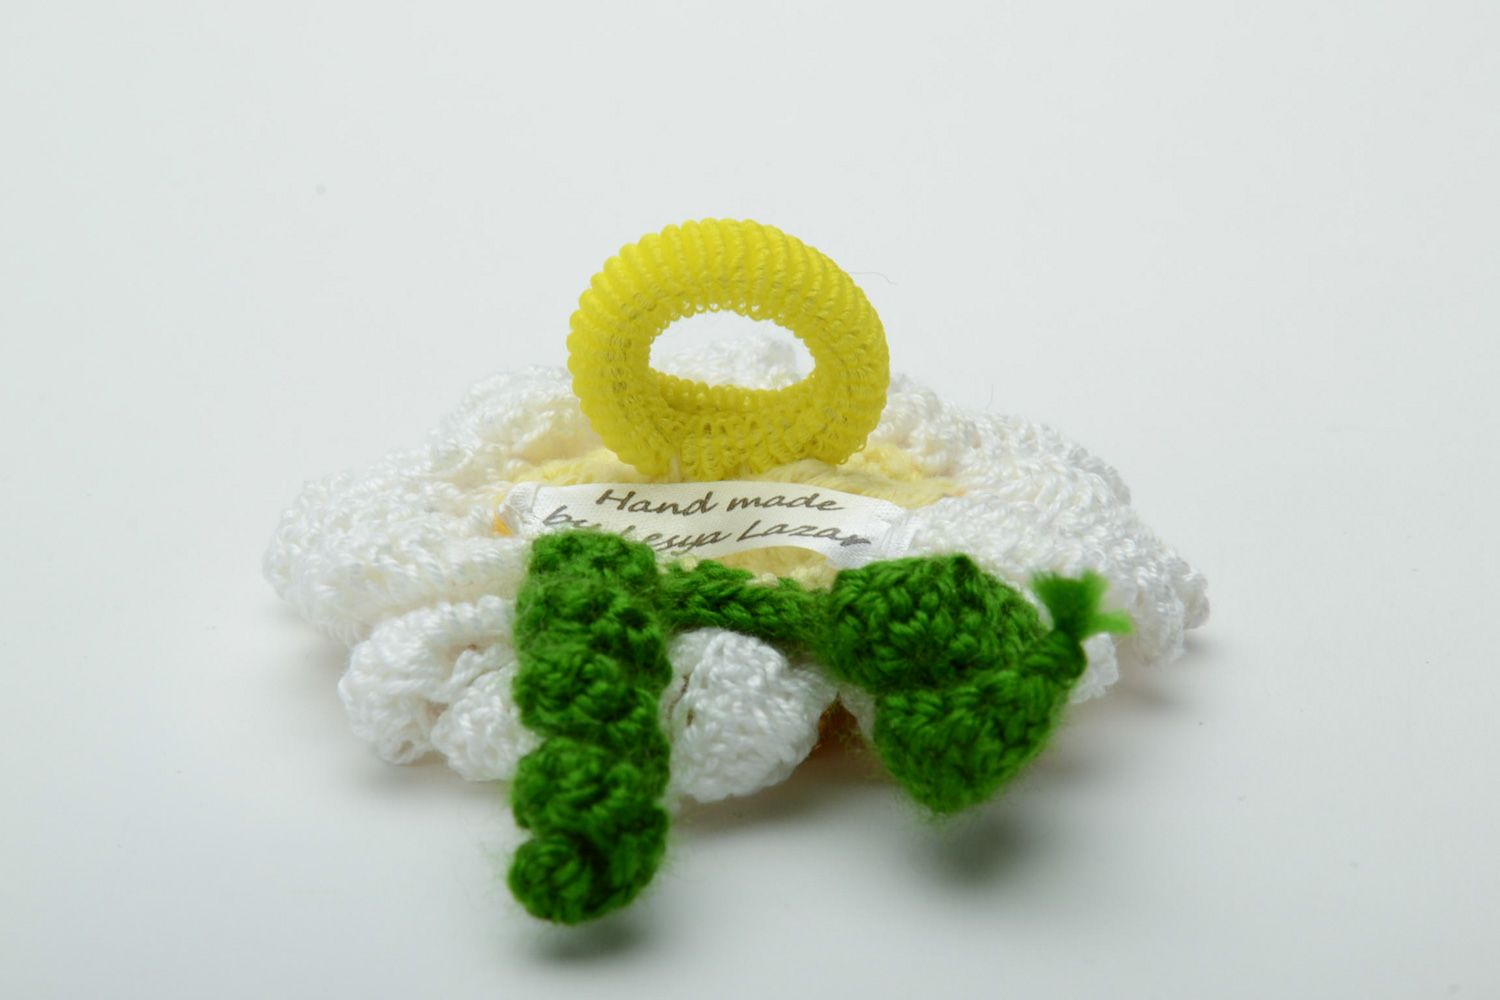 Handmade crochet flower hair tie photo 4